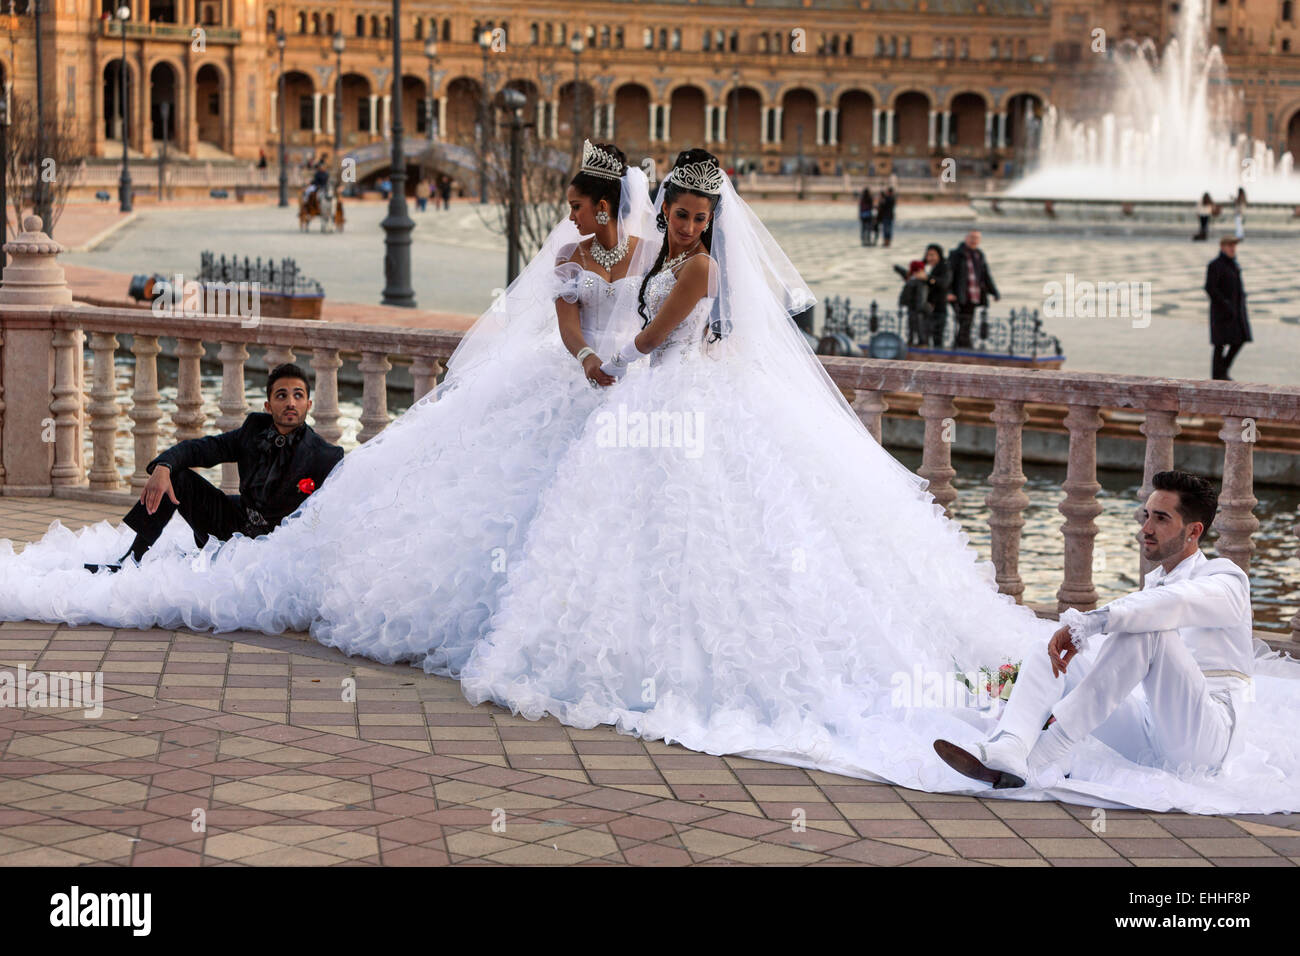 Gypsy Wedding Dress Stockfotos und -bilder Kaufen - Alamy